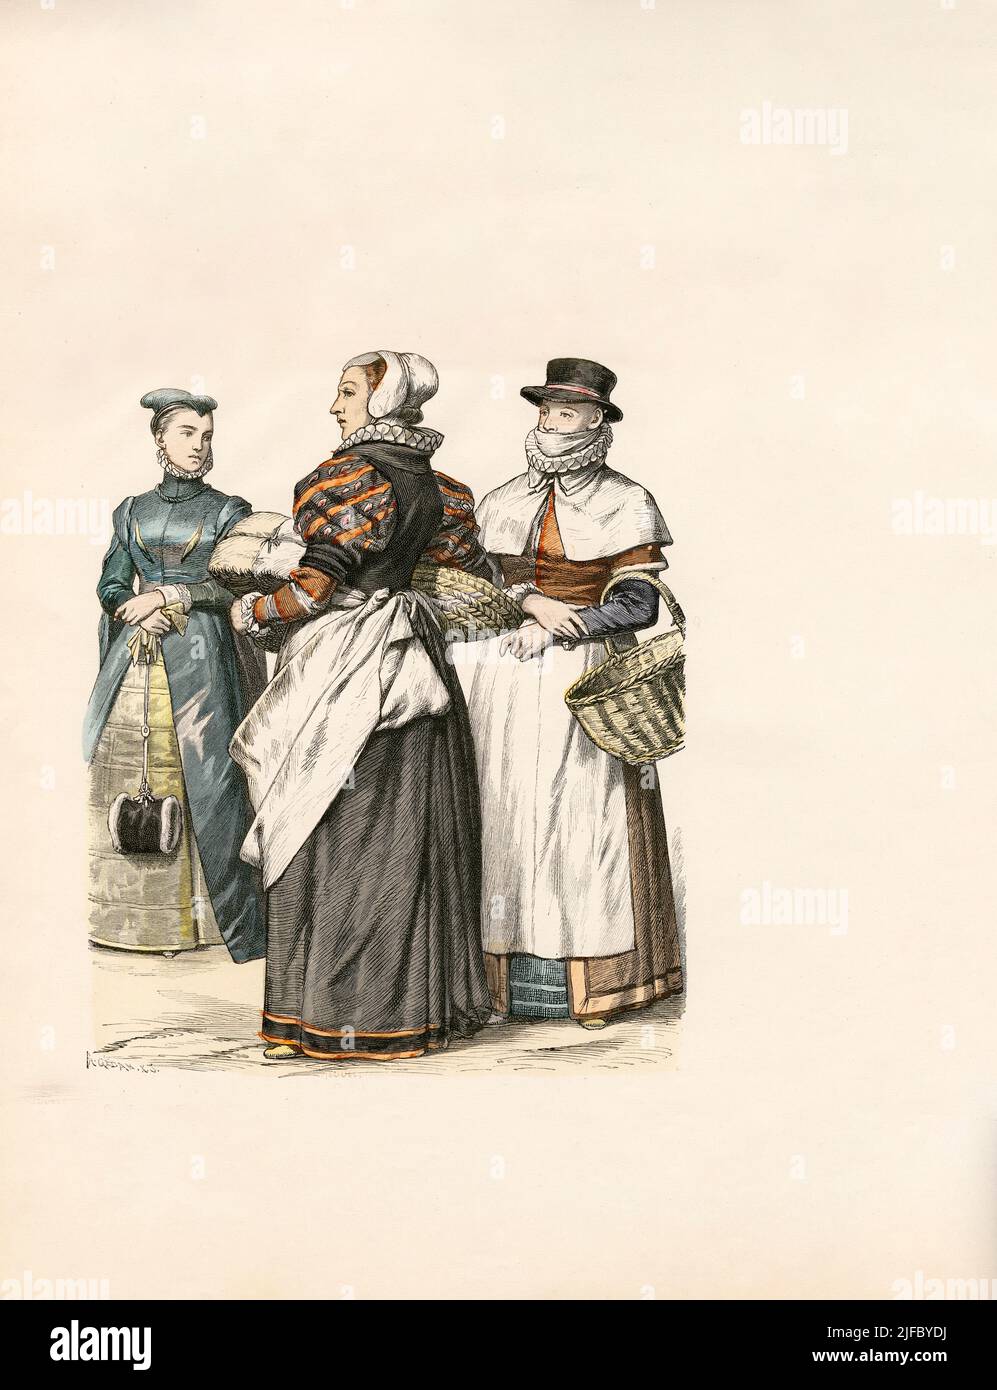 Merchant's Wife - London (1590), Servant Woman, Townswoman, England, 16th Century, Illustration, The History of Costume, Braun & Schneider, Munich, Germany, 1861-1880 Stock Photo